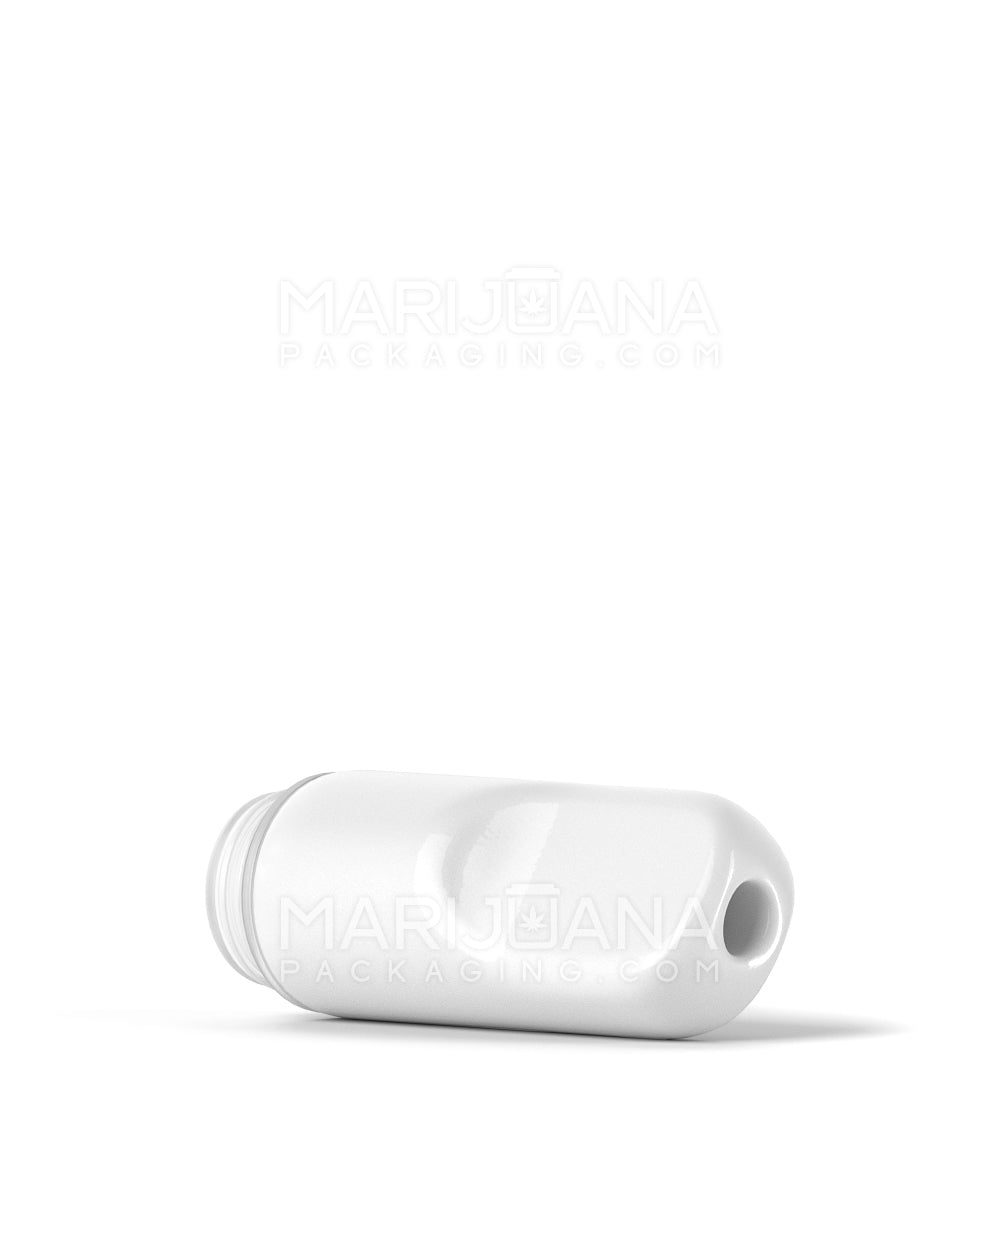 AVD | Flat Vape Mouthpiece for Glass Cartridges | White Ceramic - Eazy Press - 600 Count - 5